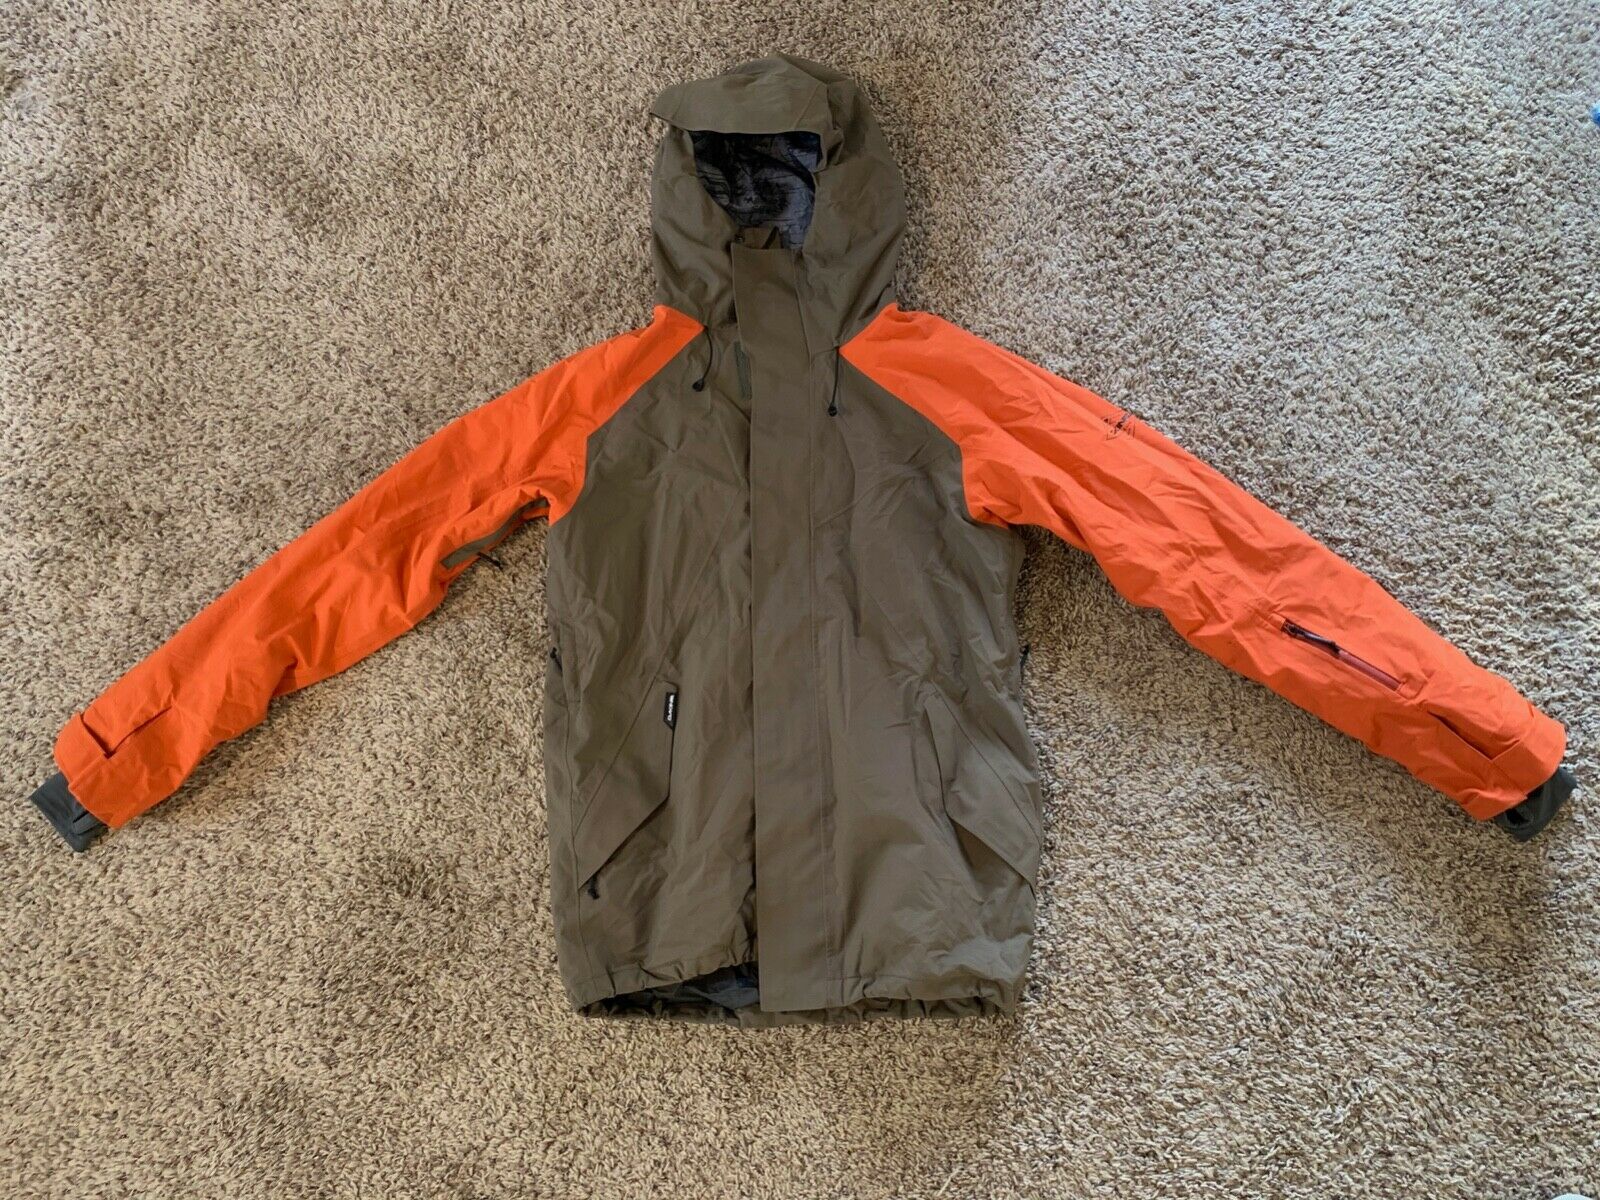 Dakine Ski Jacket - Mens Medium - Orange And Brown - Used Once